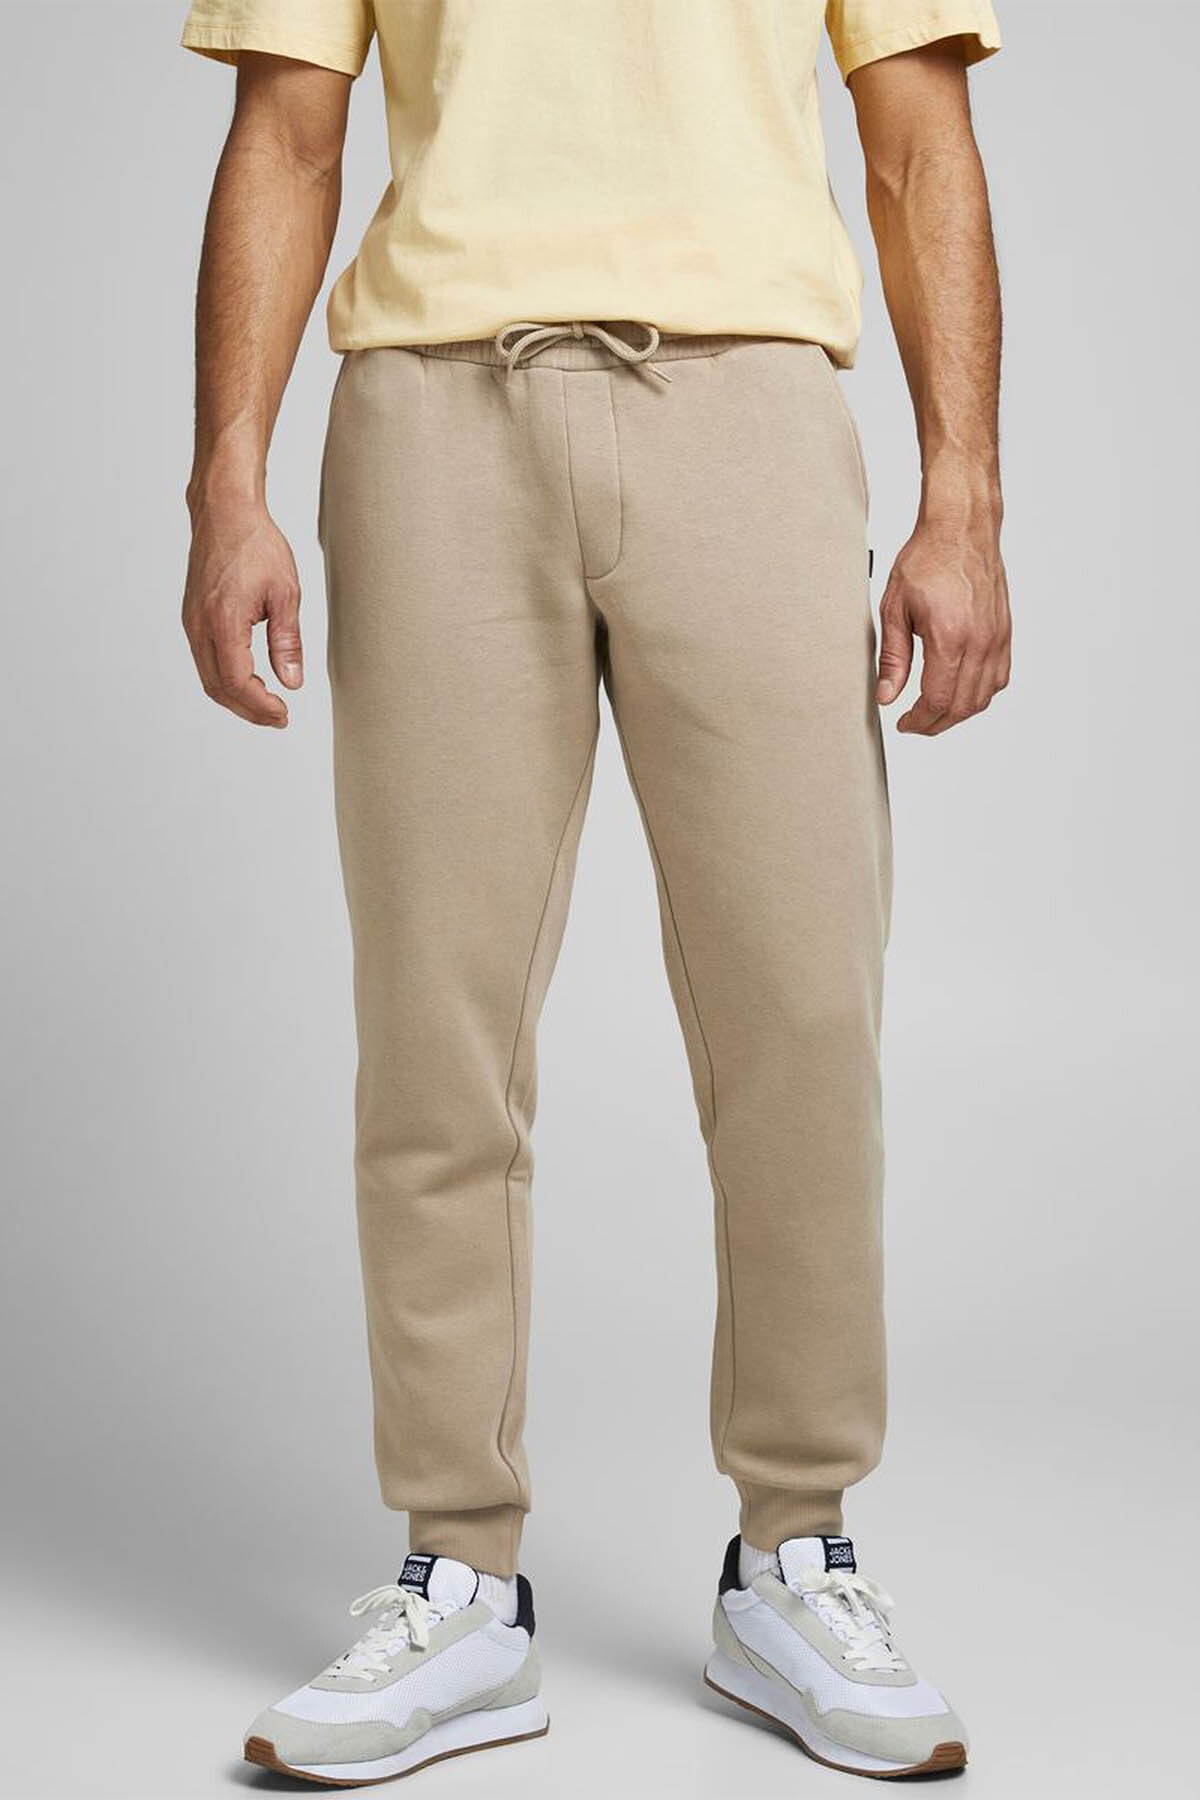 discount 56% Gray MEN FASHION Trousers Elegant Jack & Jones Chino trouser 